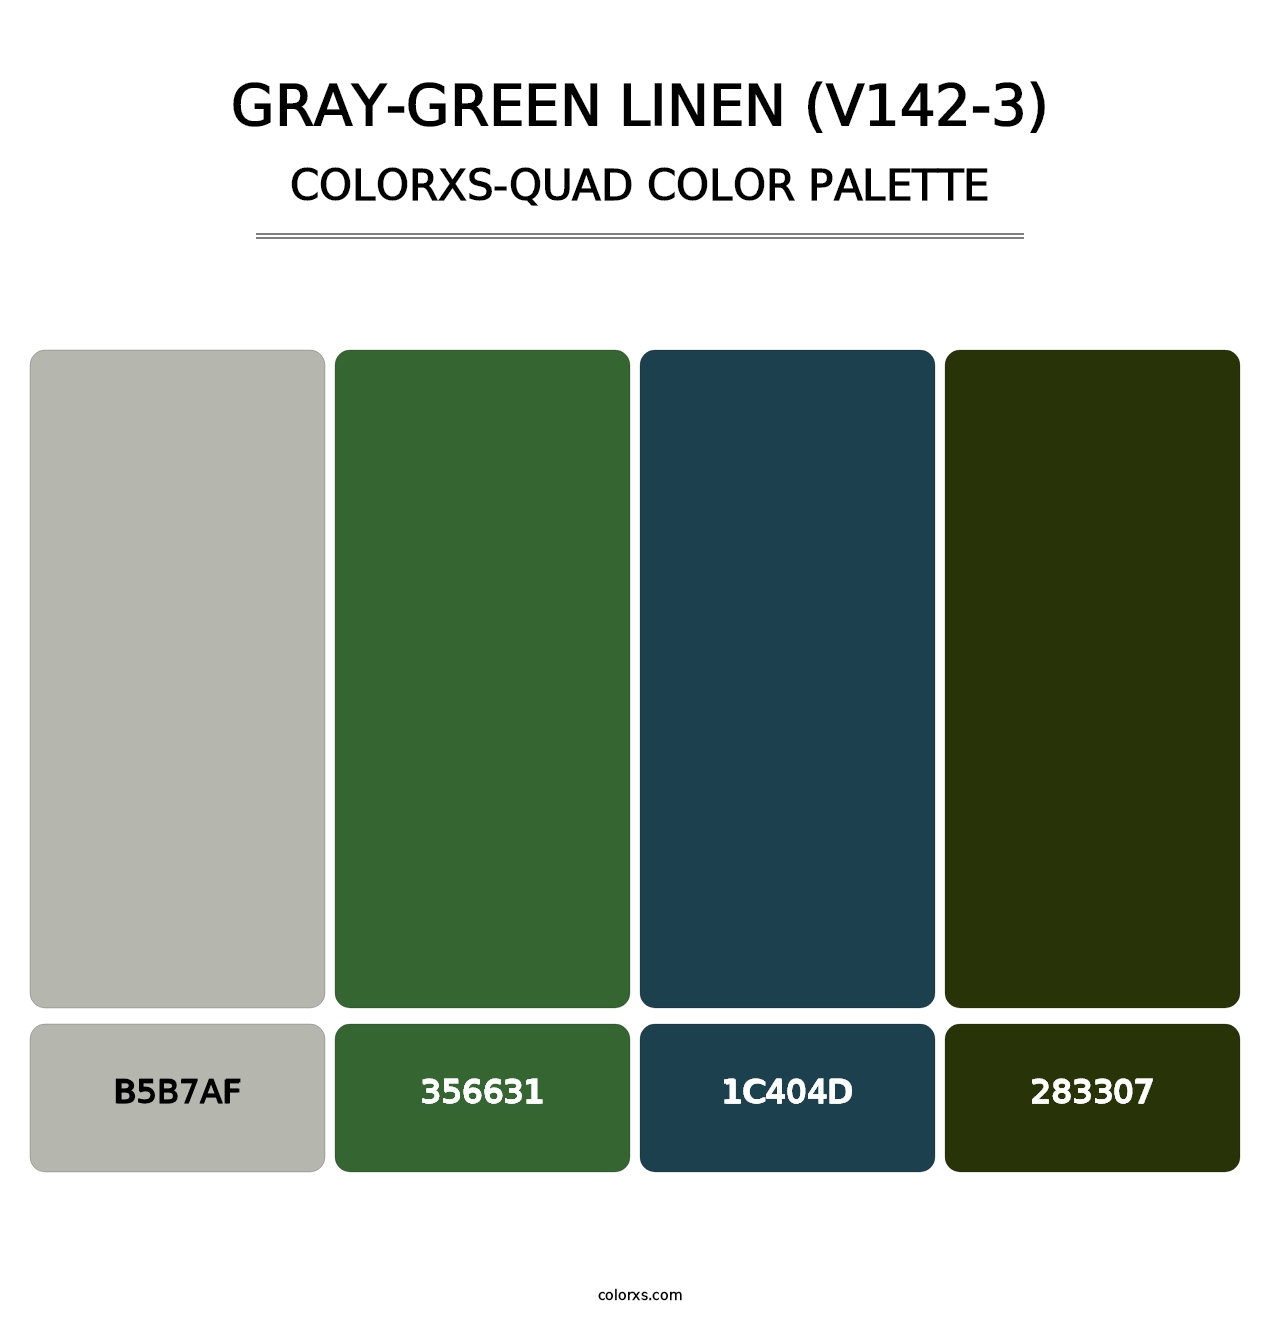 Gray-Green Linen (V142-3) - Colorxs Quad Palette